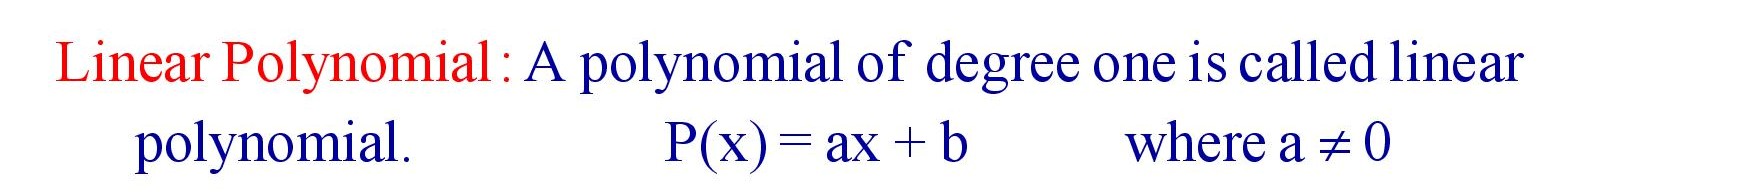 Linear Polynomial Definition